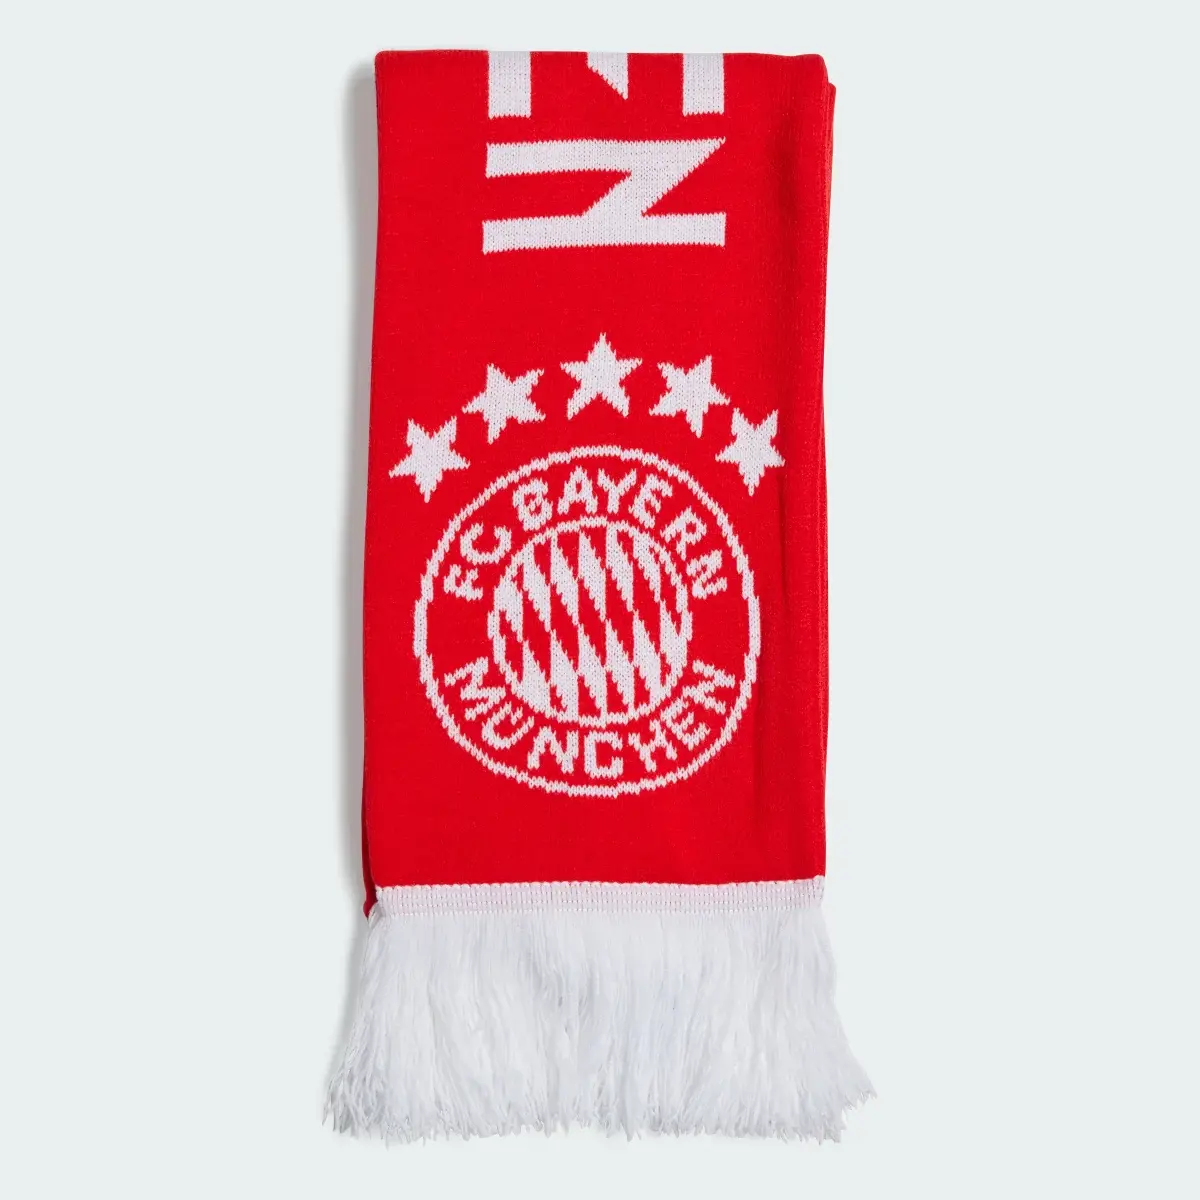 Adidas Cachecol do FC Bayern München. 1